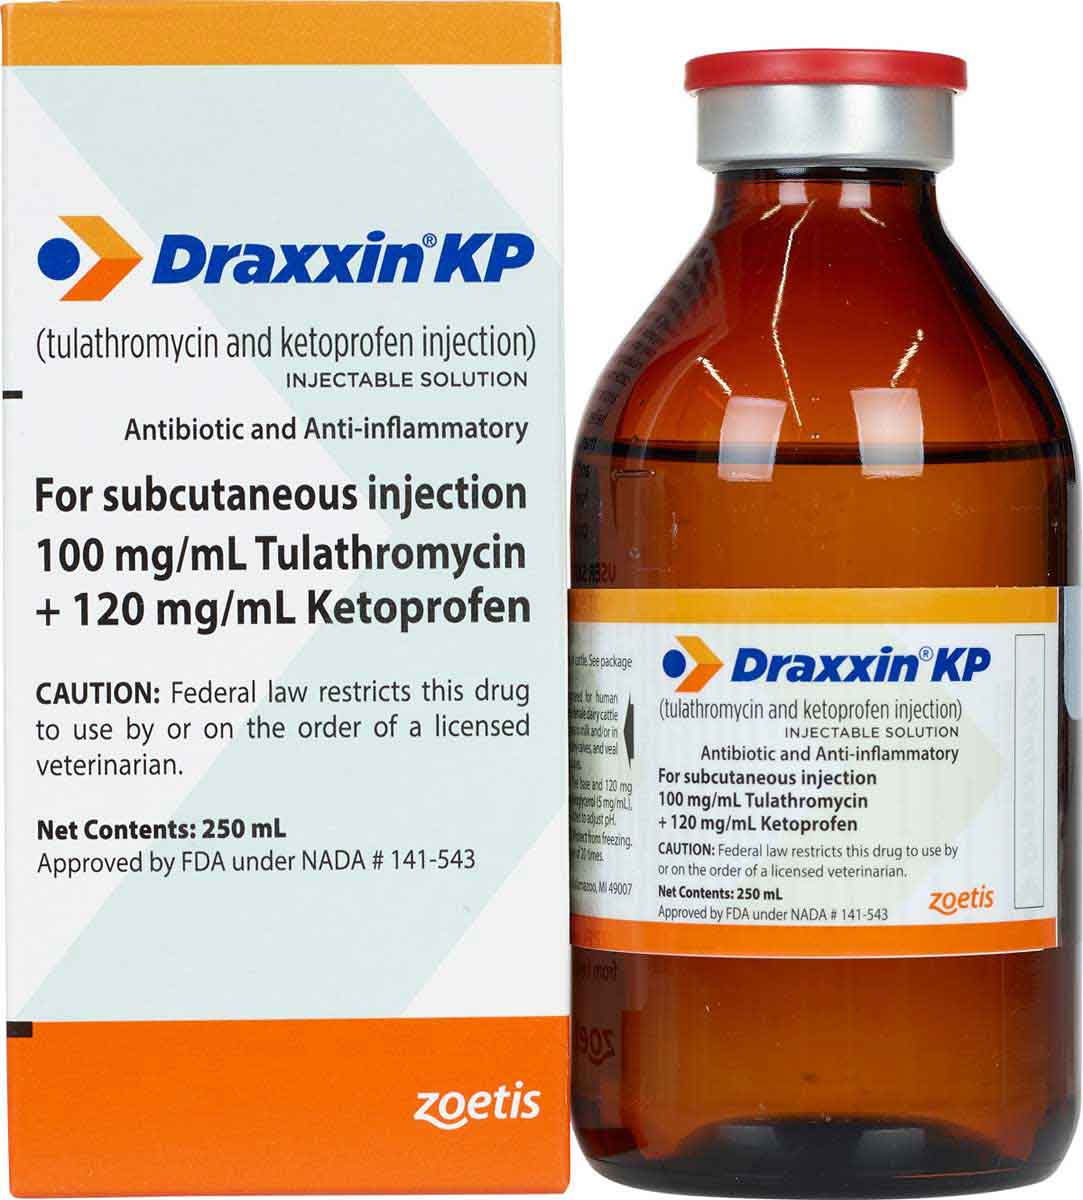 draxxin-kp-zoetis-animal-health-safe-pharmacy-antibiotics-livestock